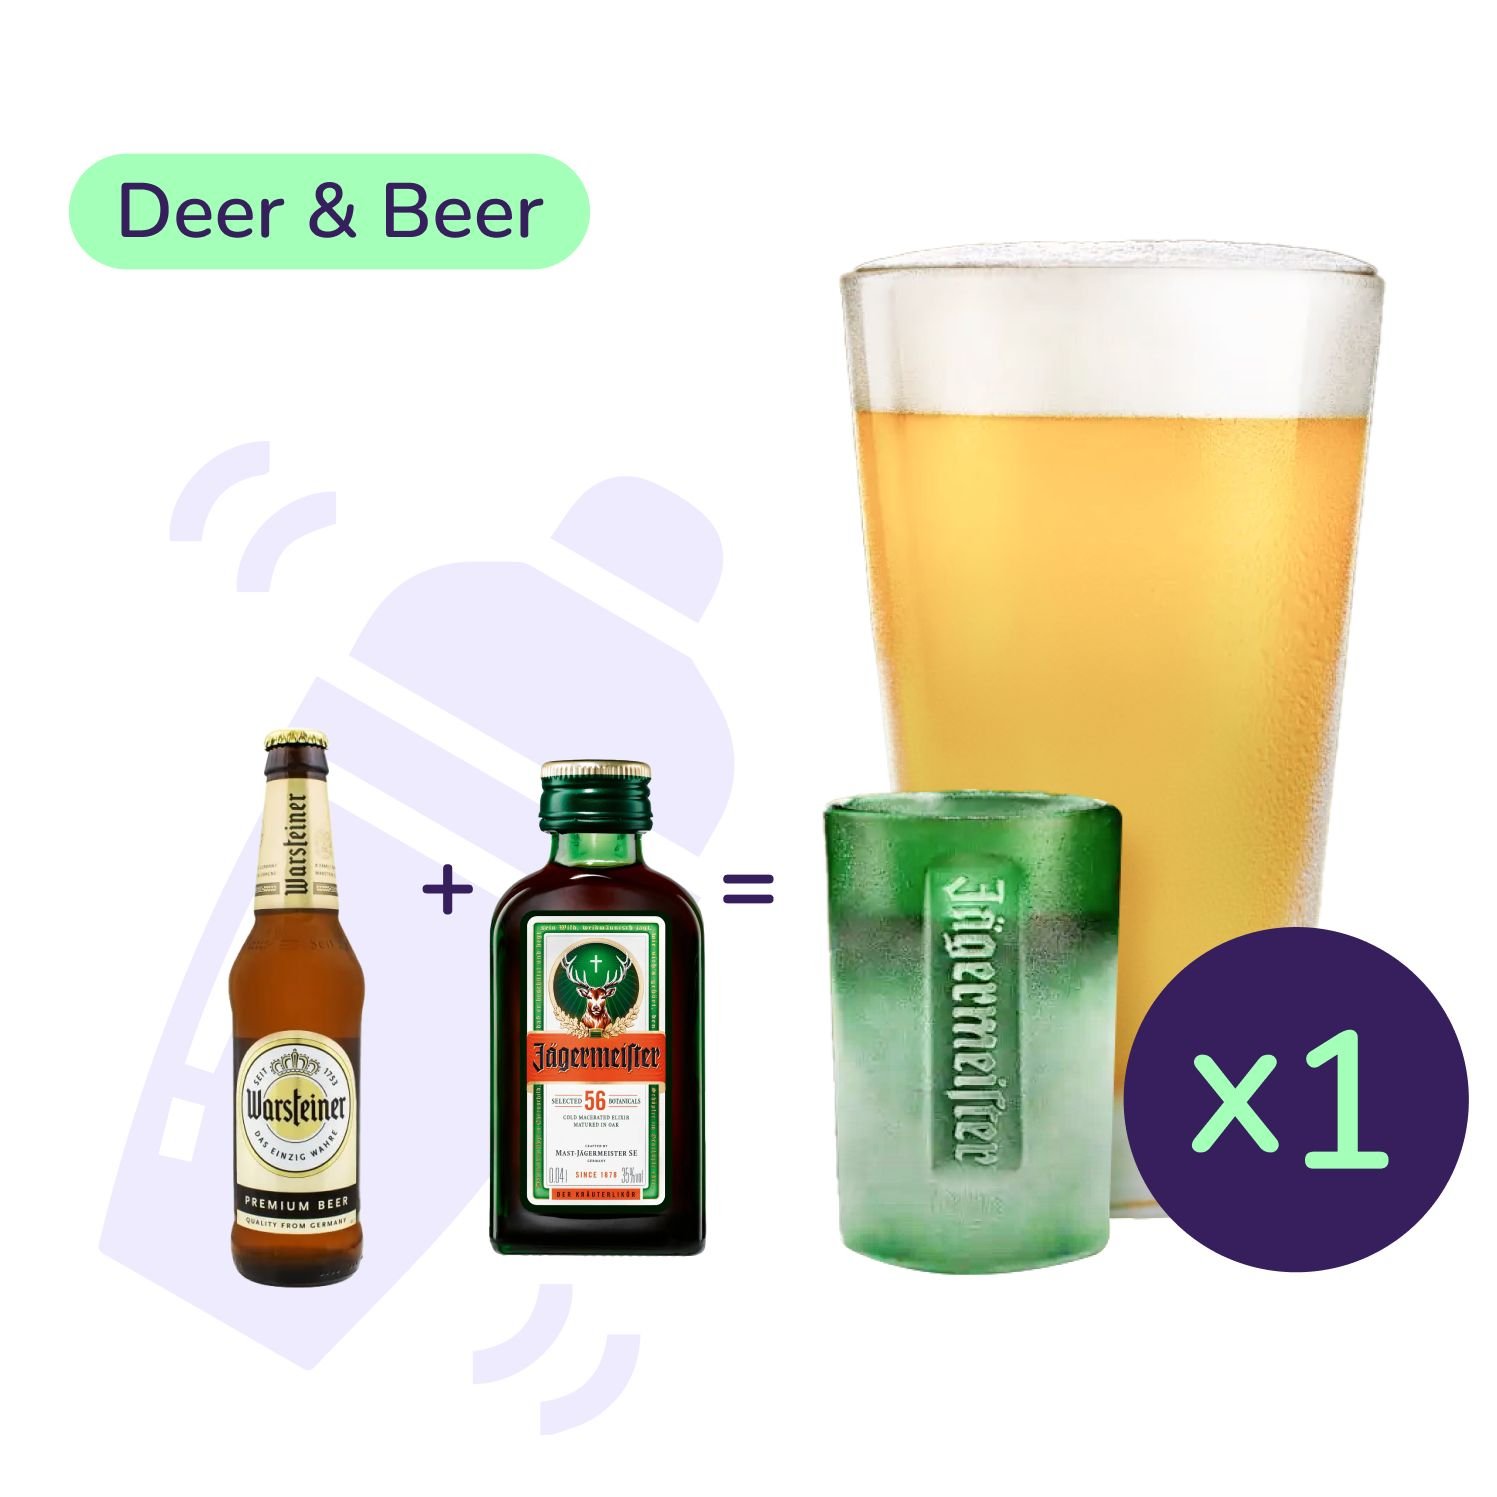 Коктейль Deer & Beer (набор ингредиентов) х1 на основе Jagermeister - фото 1